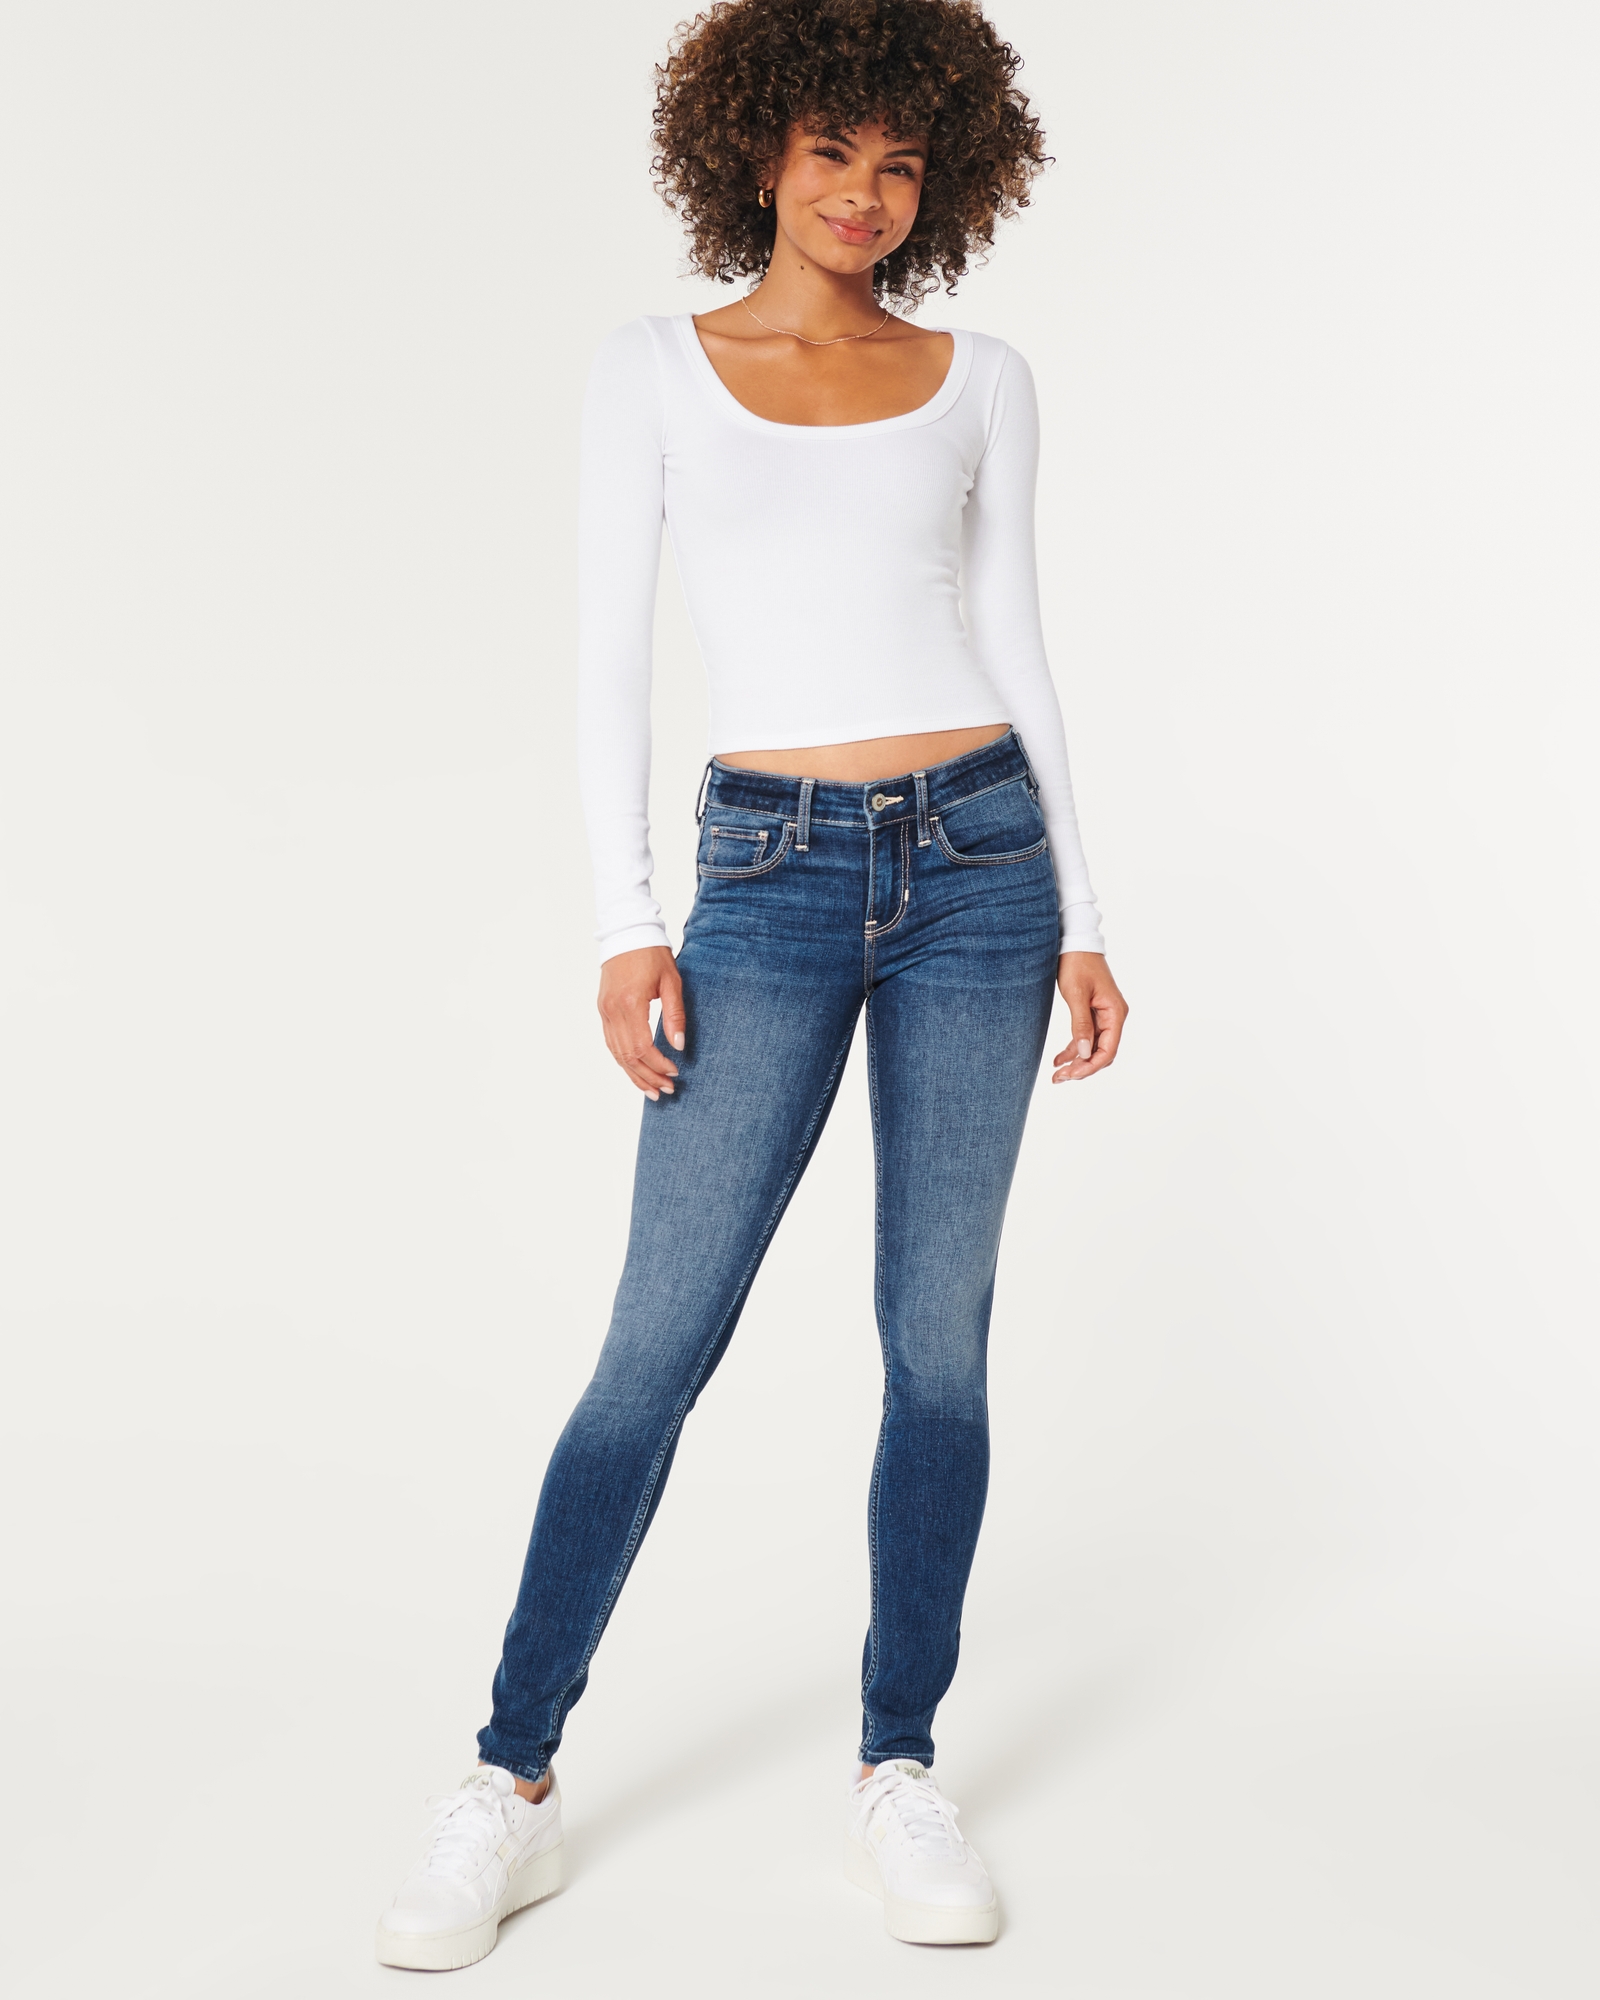 Women's Hollister Jeans Low Rose Super Skinny Distressed Sz 7R W28 L30  Great